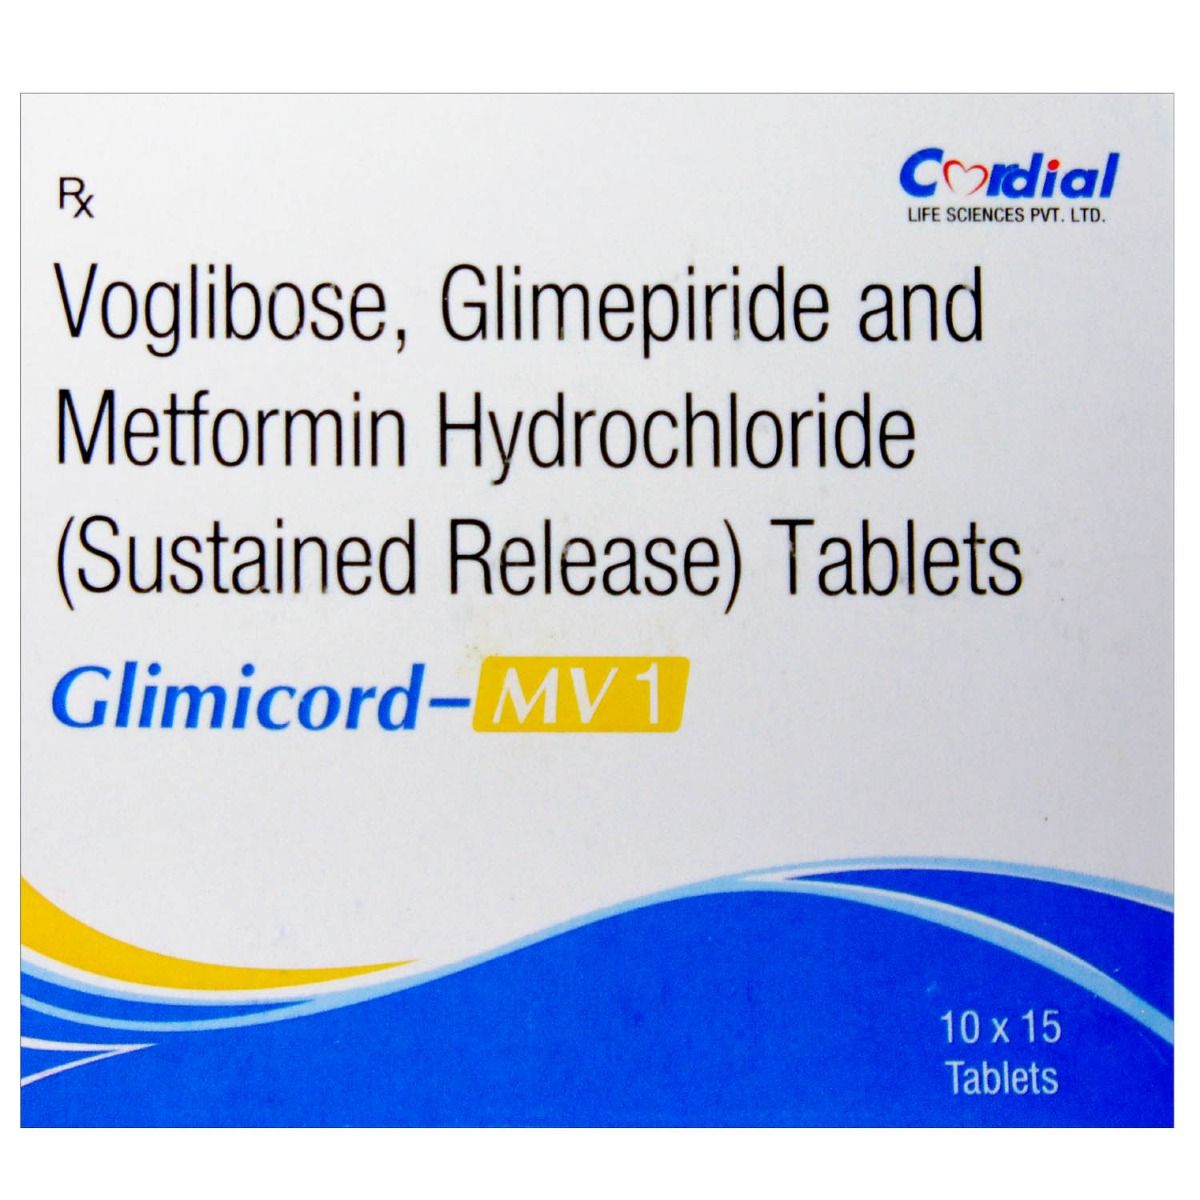 Buy Glimicord-Mv 1 Tablet 15's Online